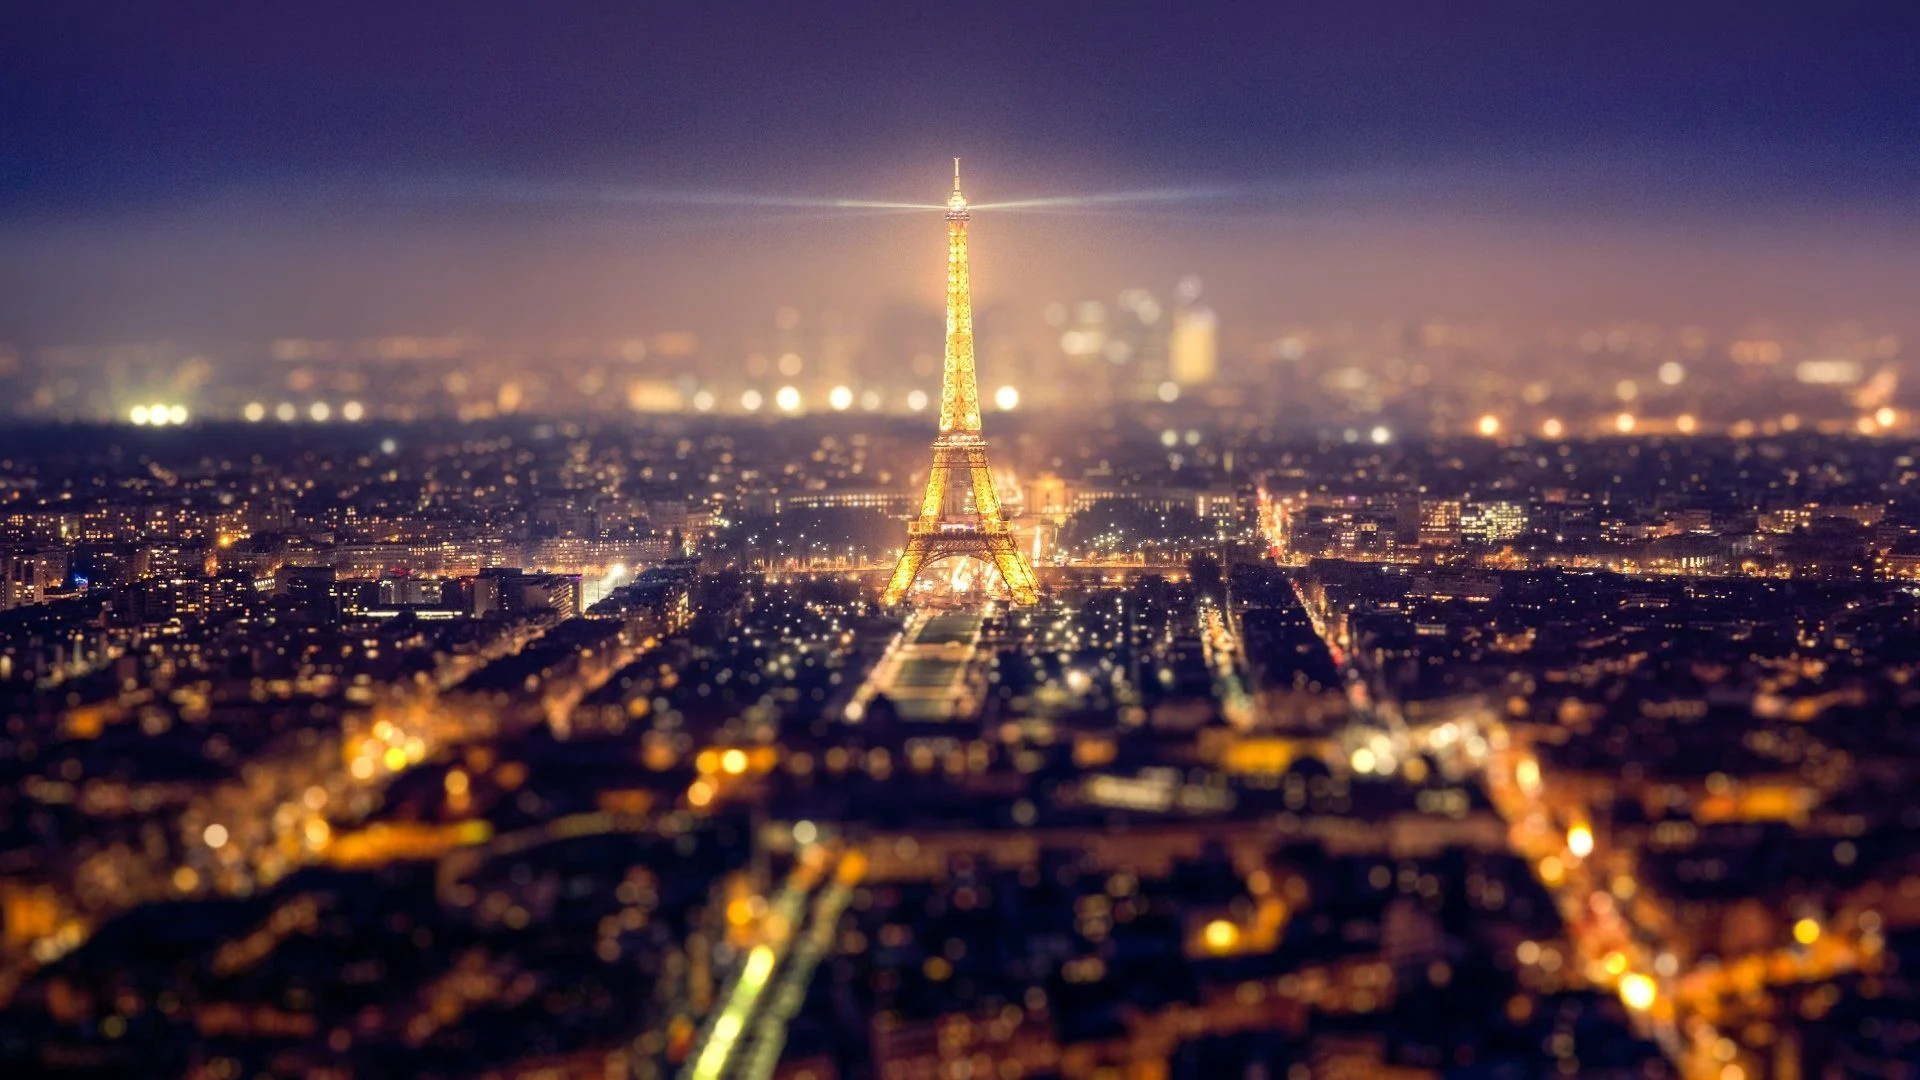 Paris: Cityscape, Night city lights, Capital of France. 1920x1080 Full HD Wallpaper.